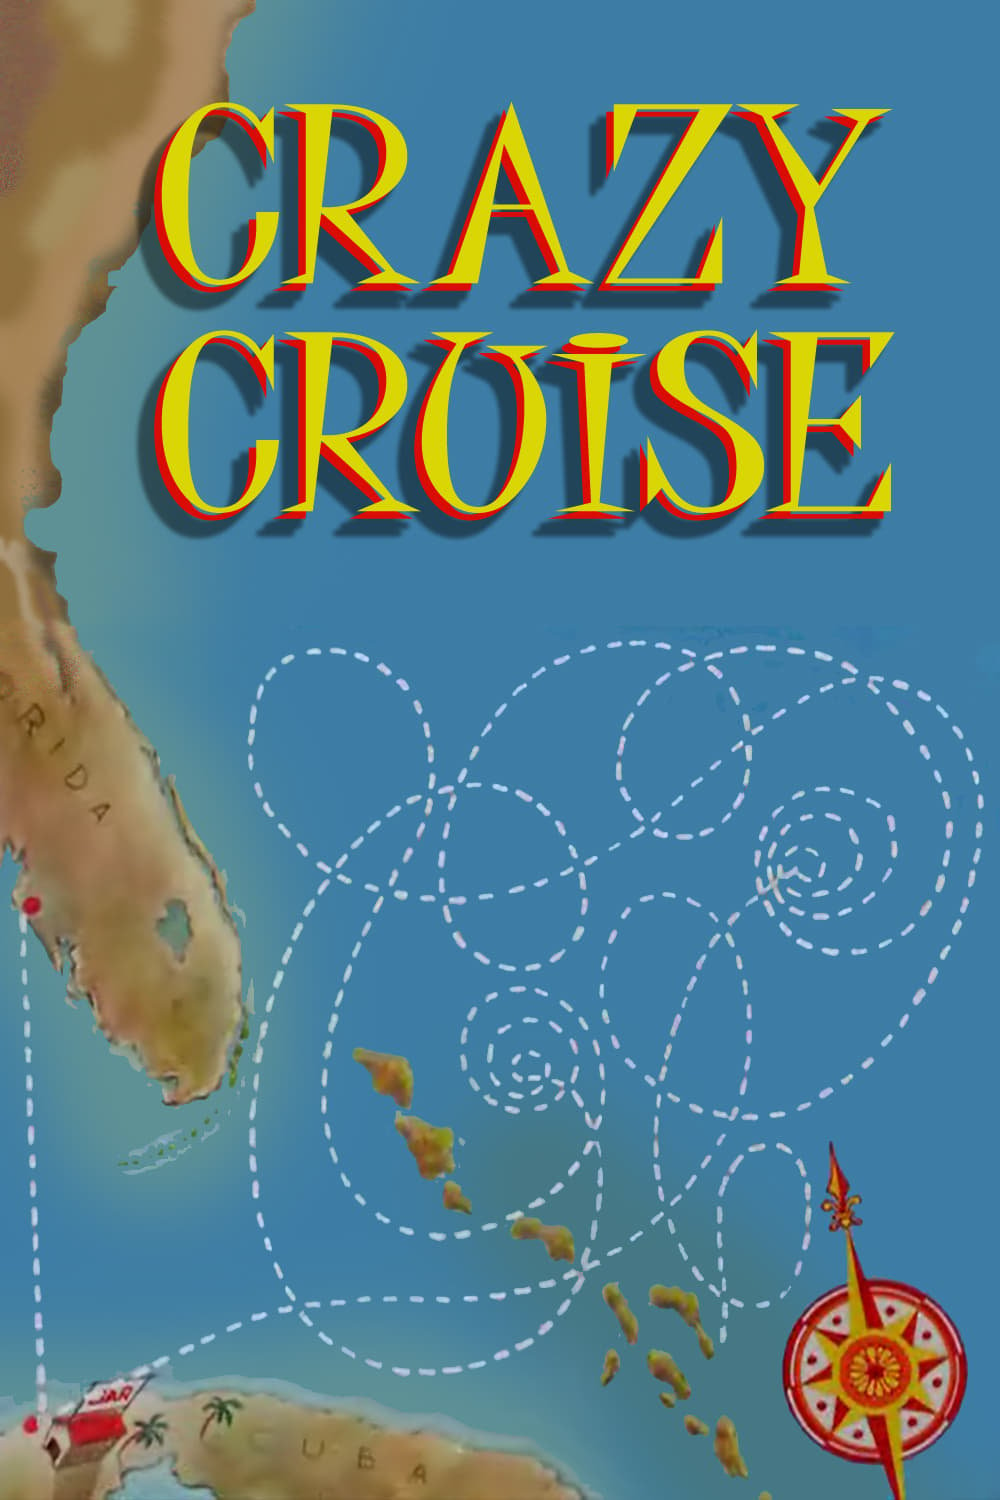 Crazy Cruise (1942)